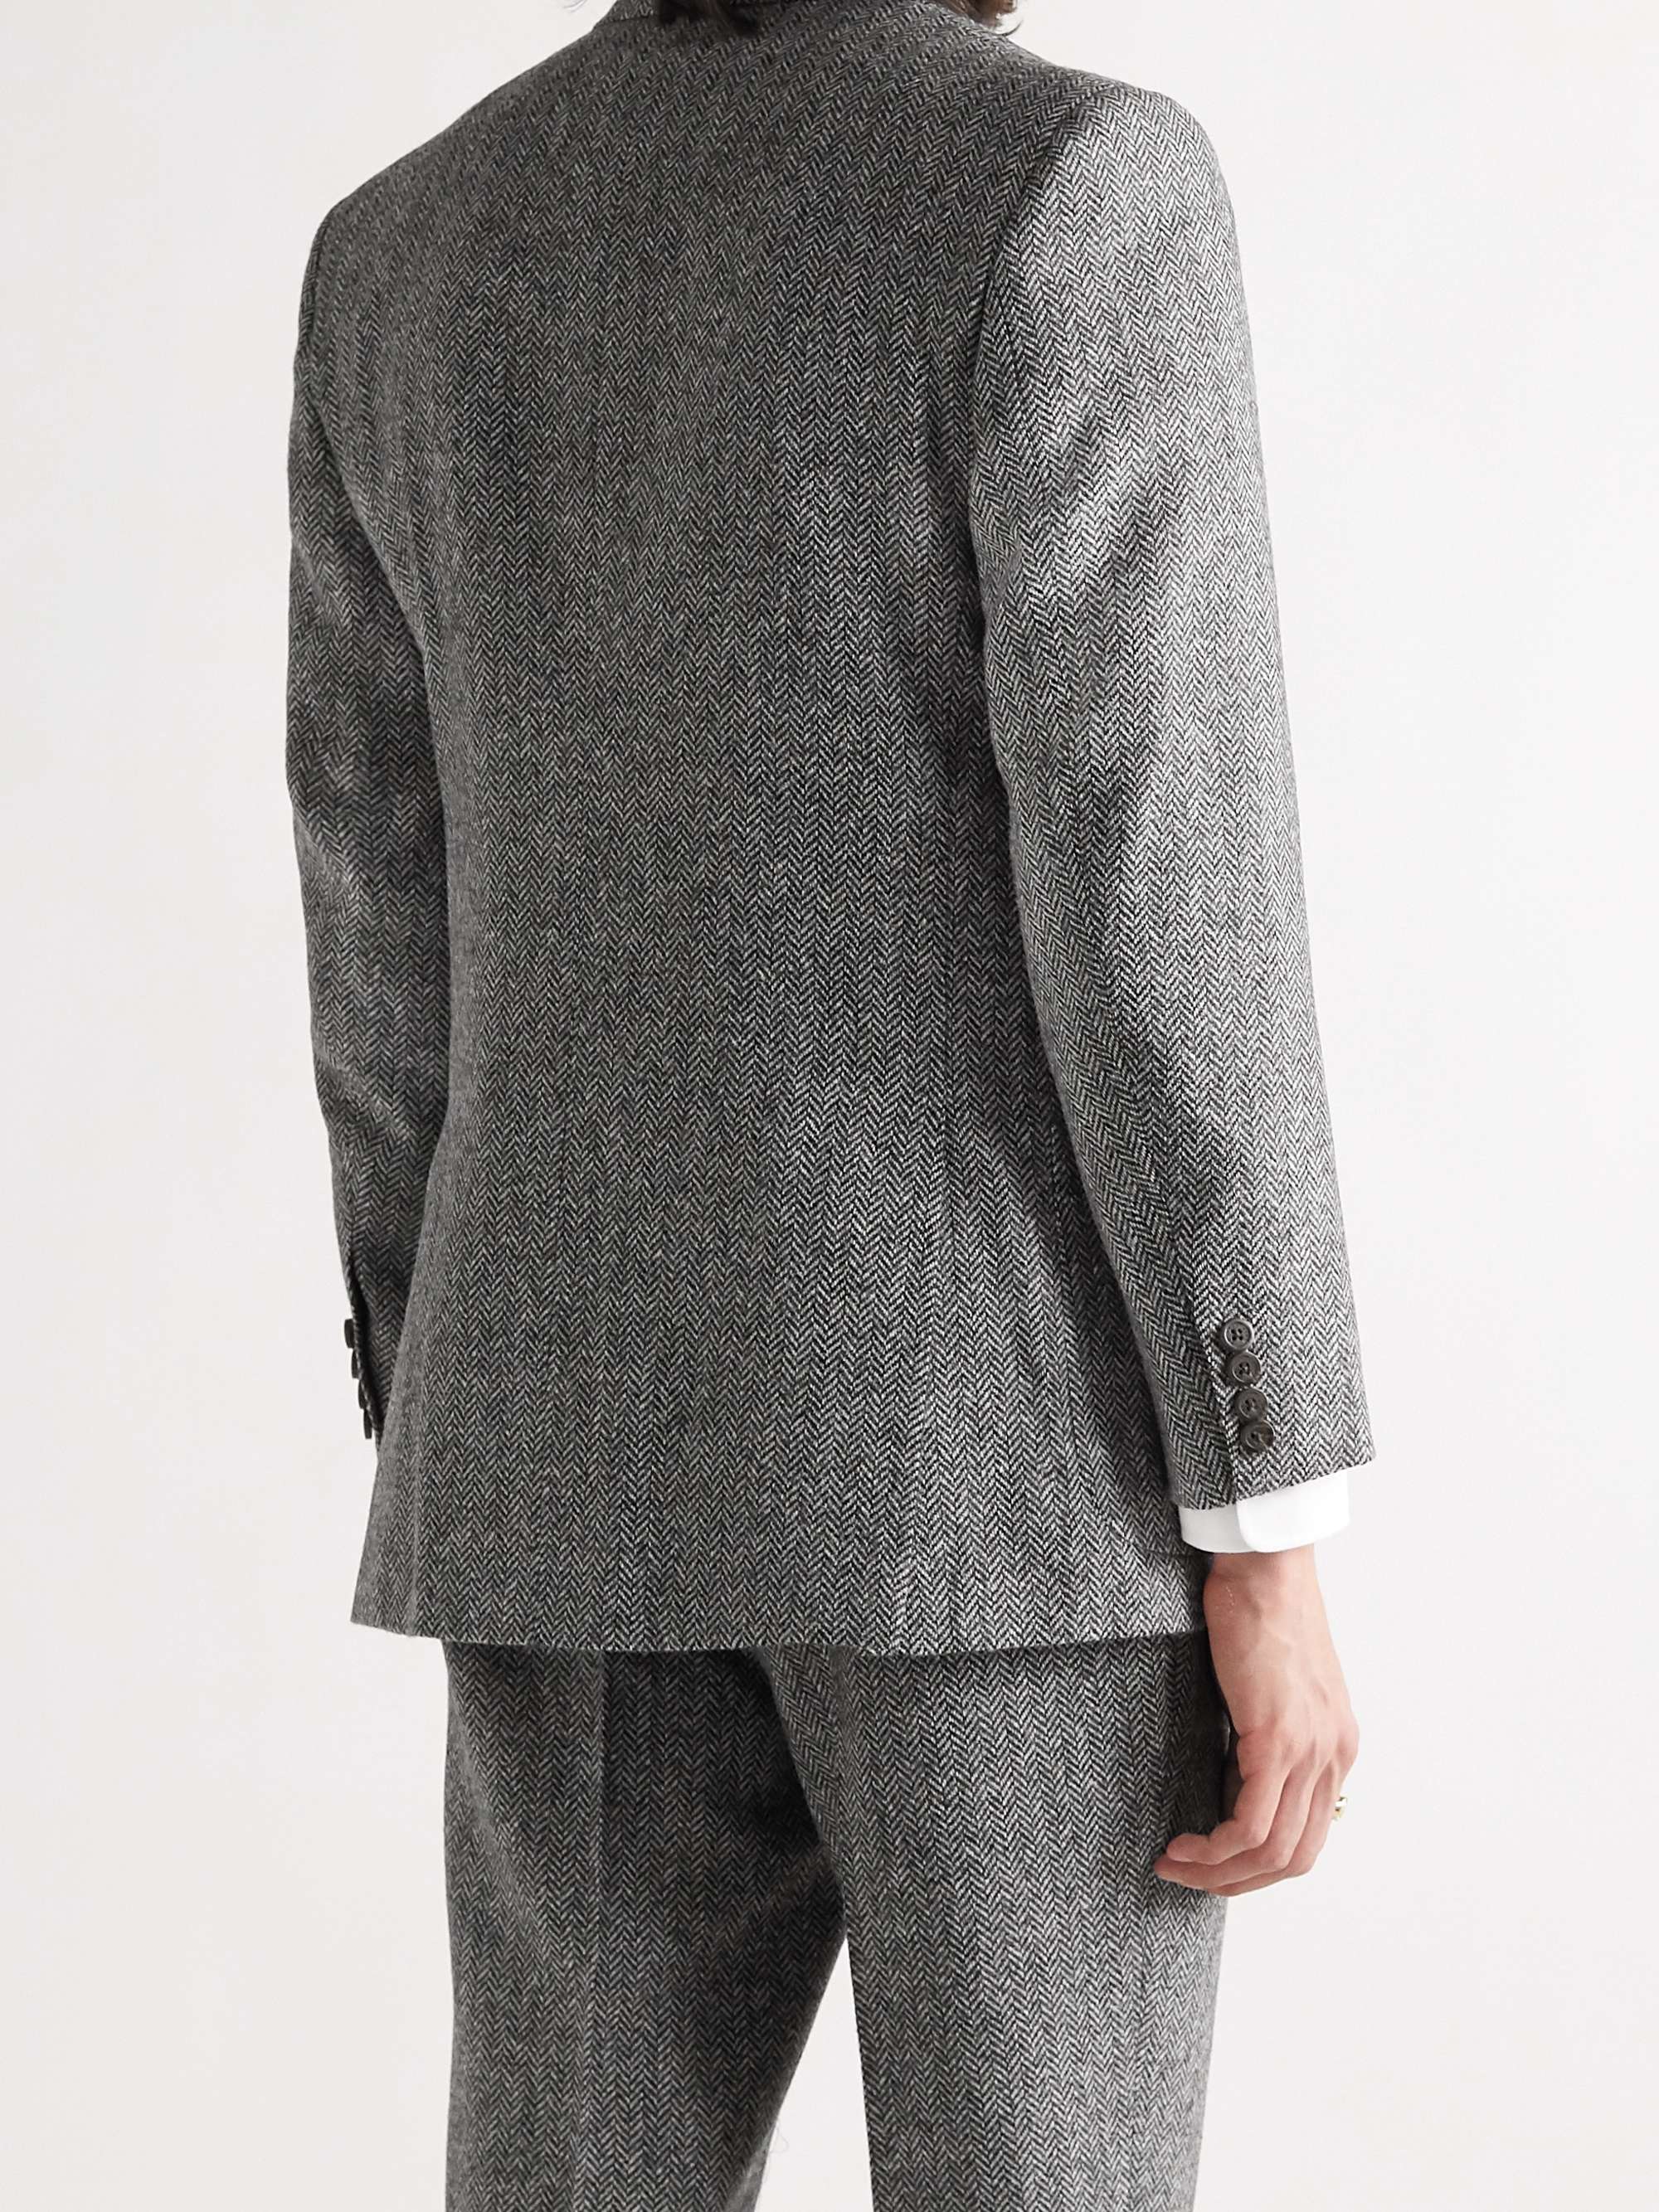 AIMÉ LEON DORE + Martin Greenfield Double-Breasted Herringbone Wool Suit  Jacket | MR PORTER